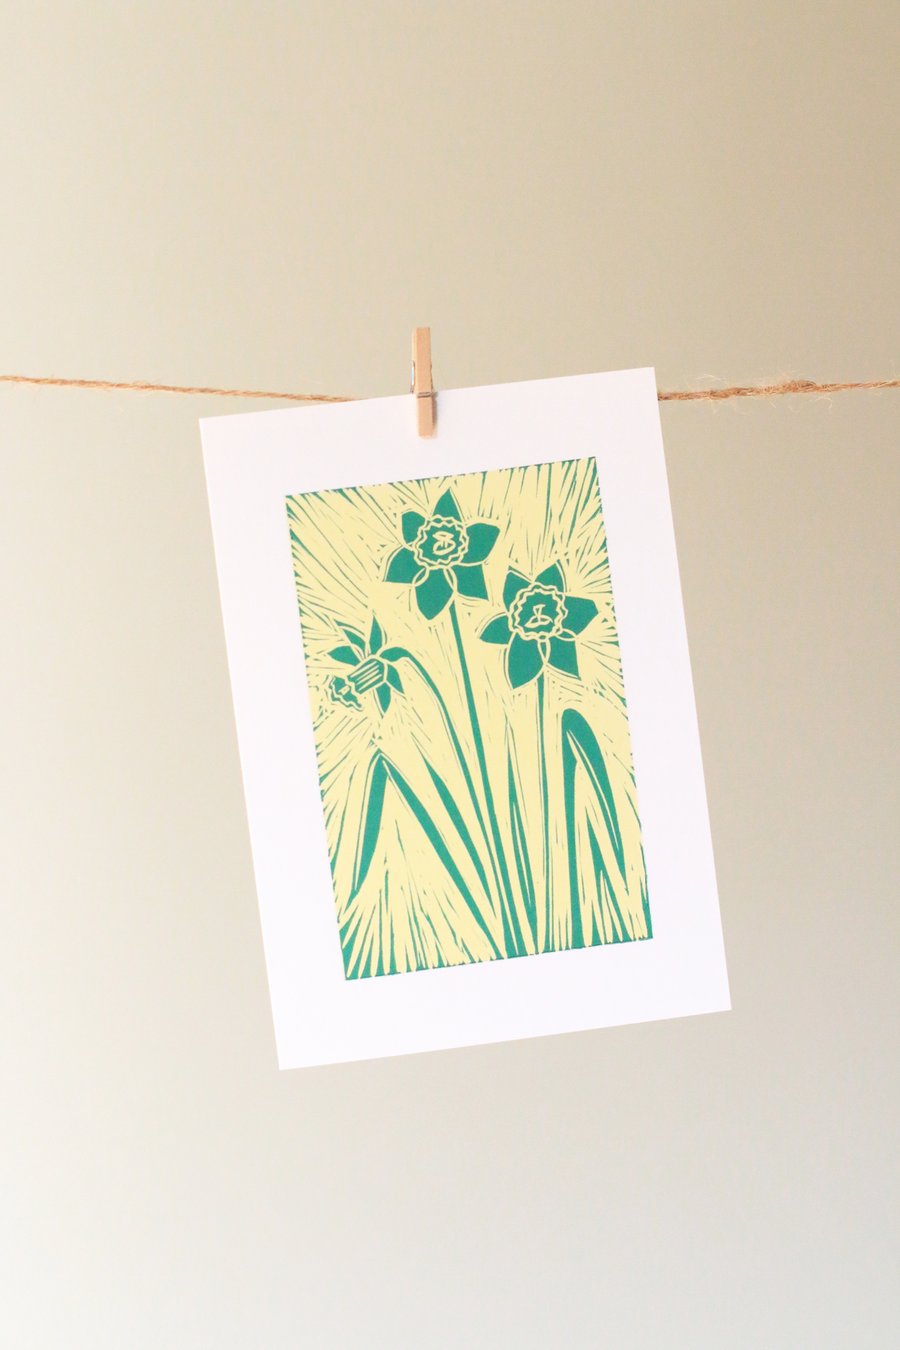 'Daffodil' greetings card